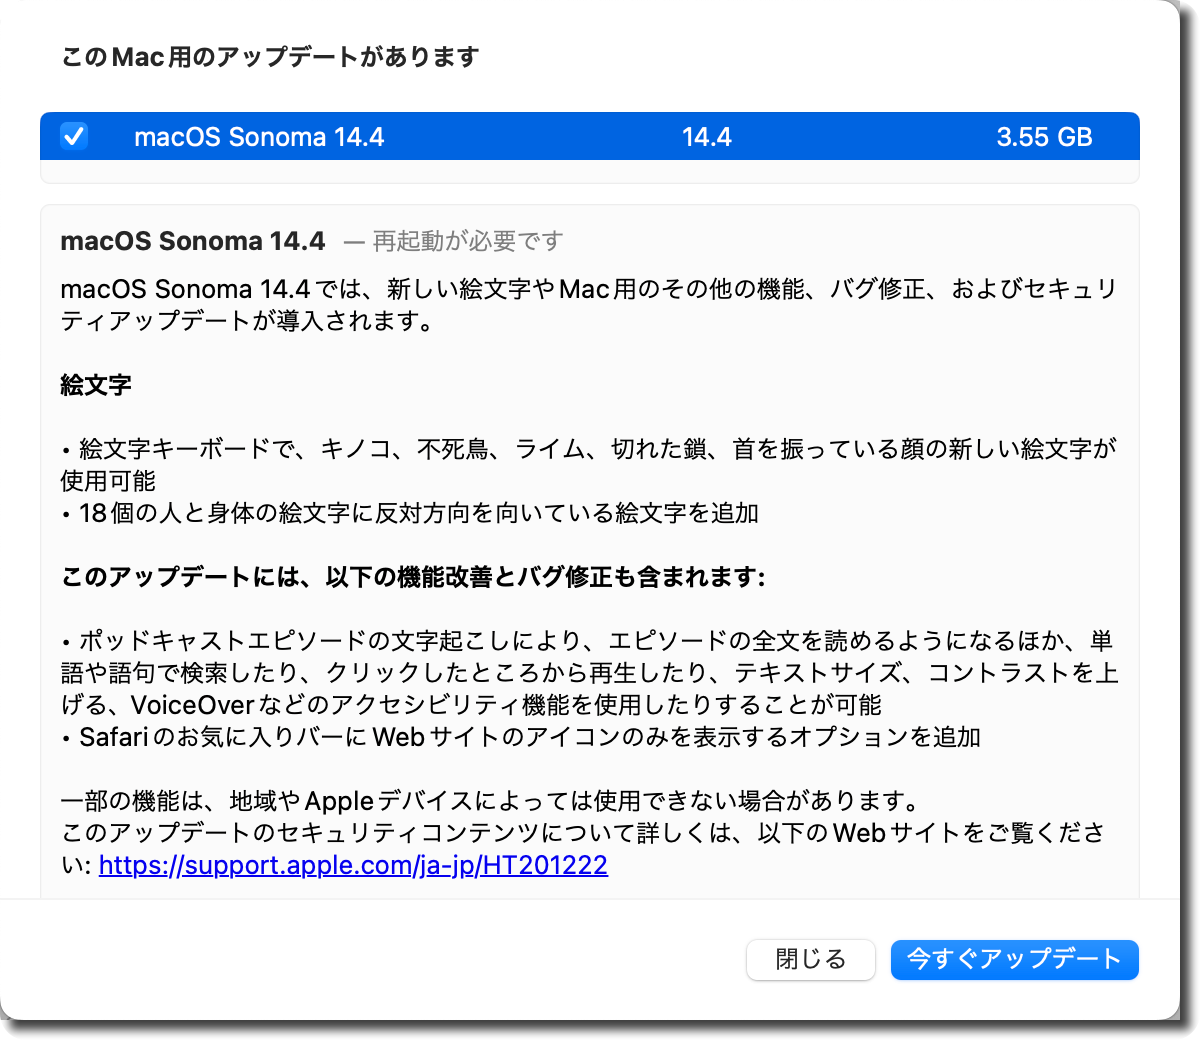 MacOS Sonoma 14.4.